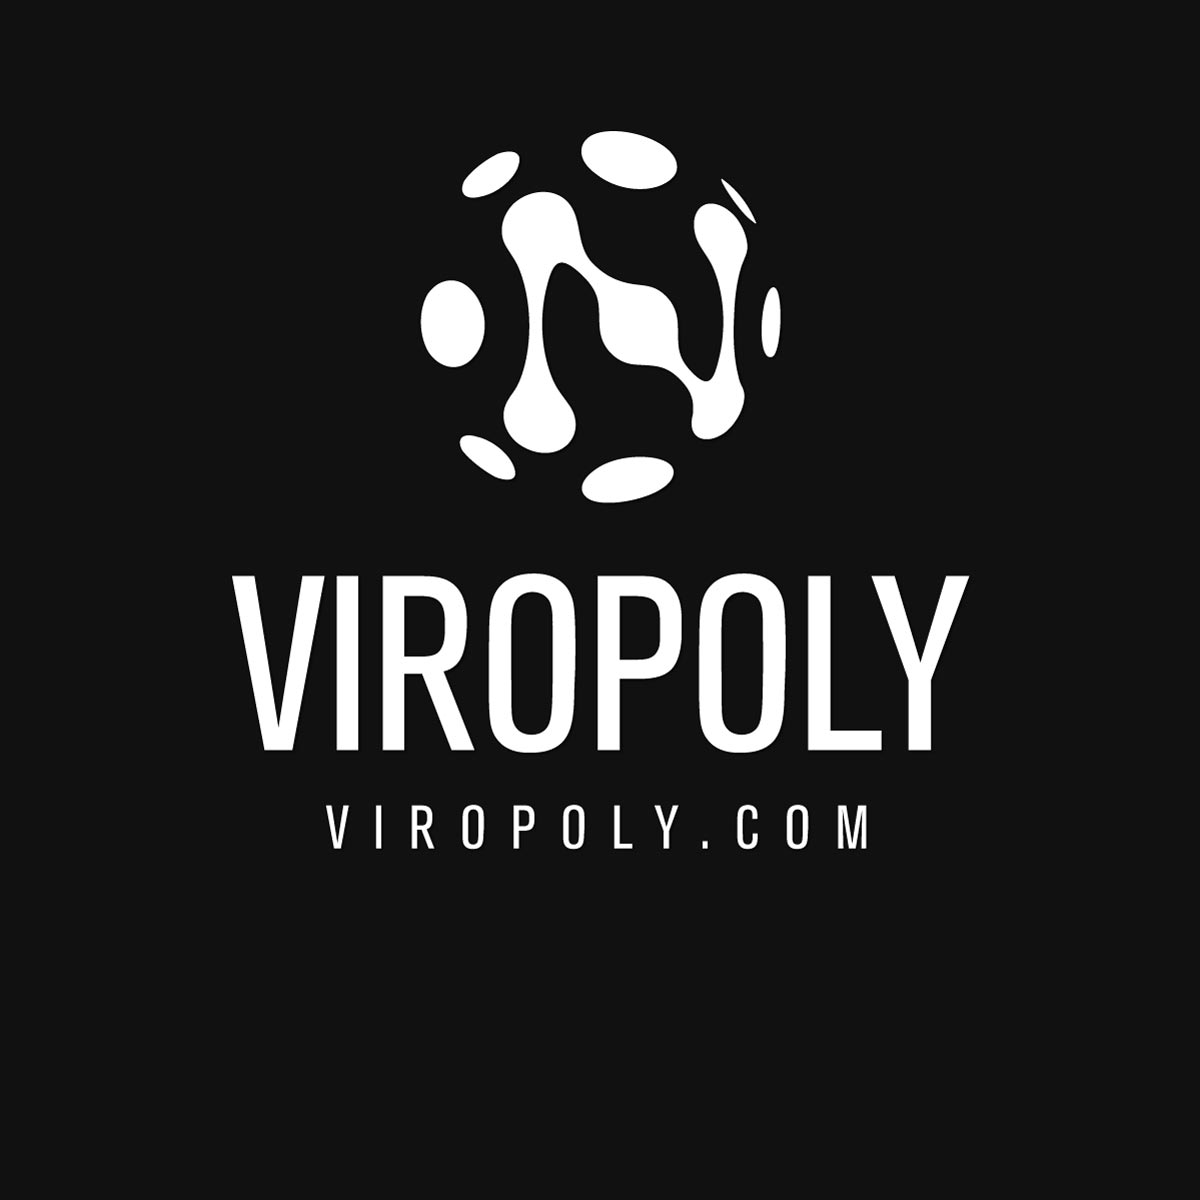 viropoly - Branding design by brandizle